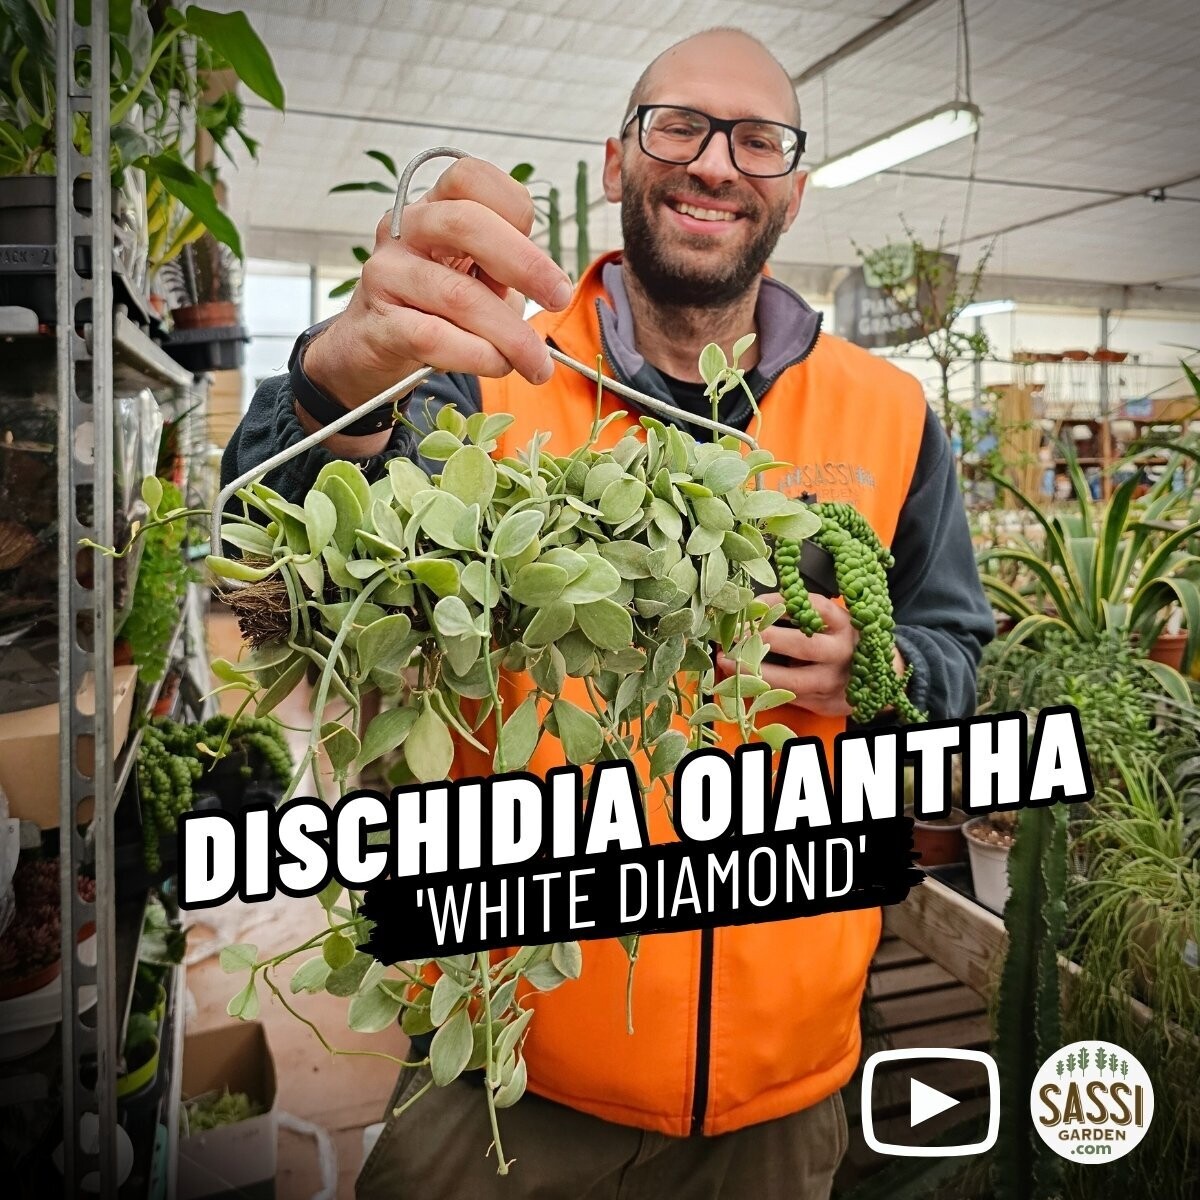 Dischidia oiantha 'White Diamond'